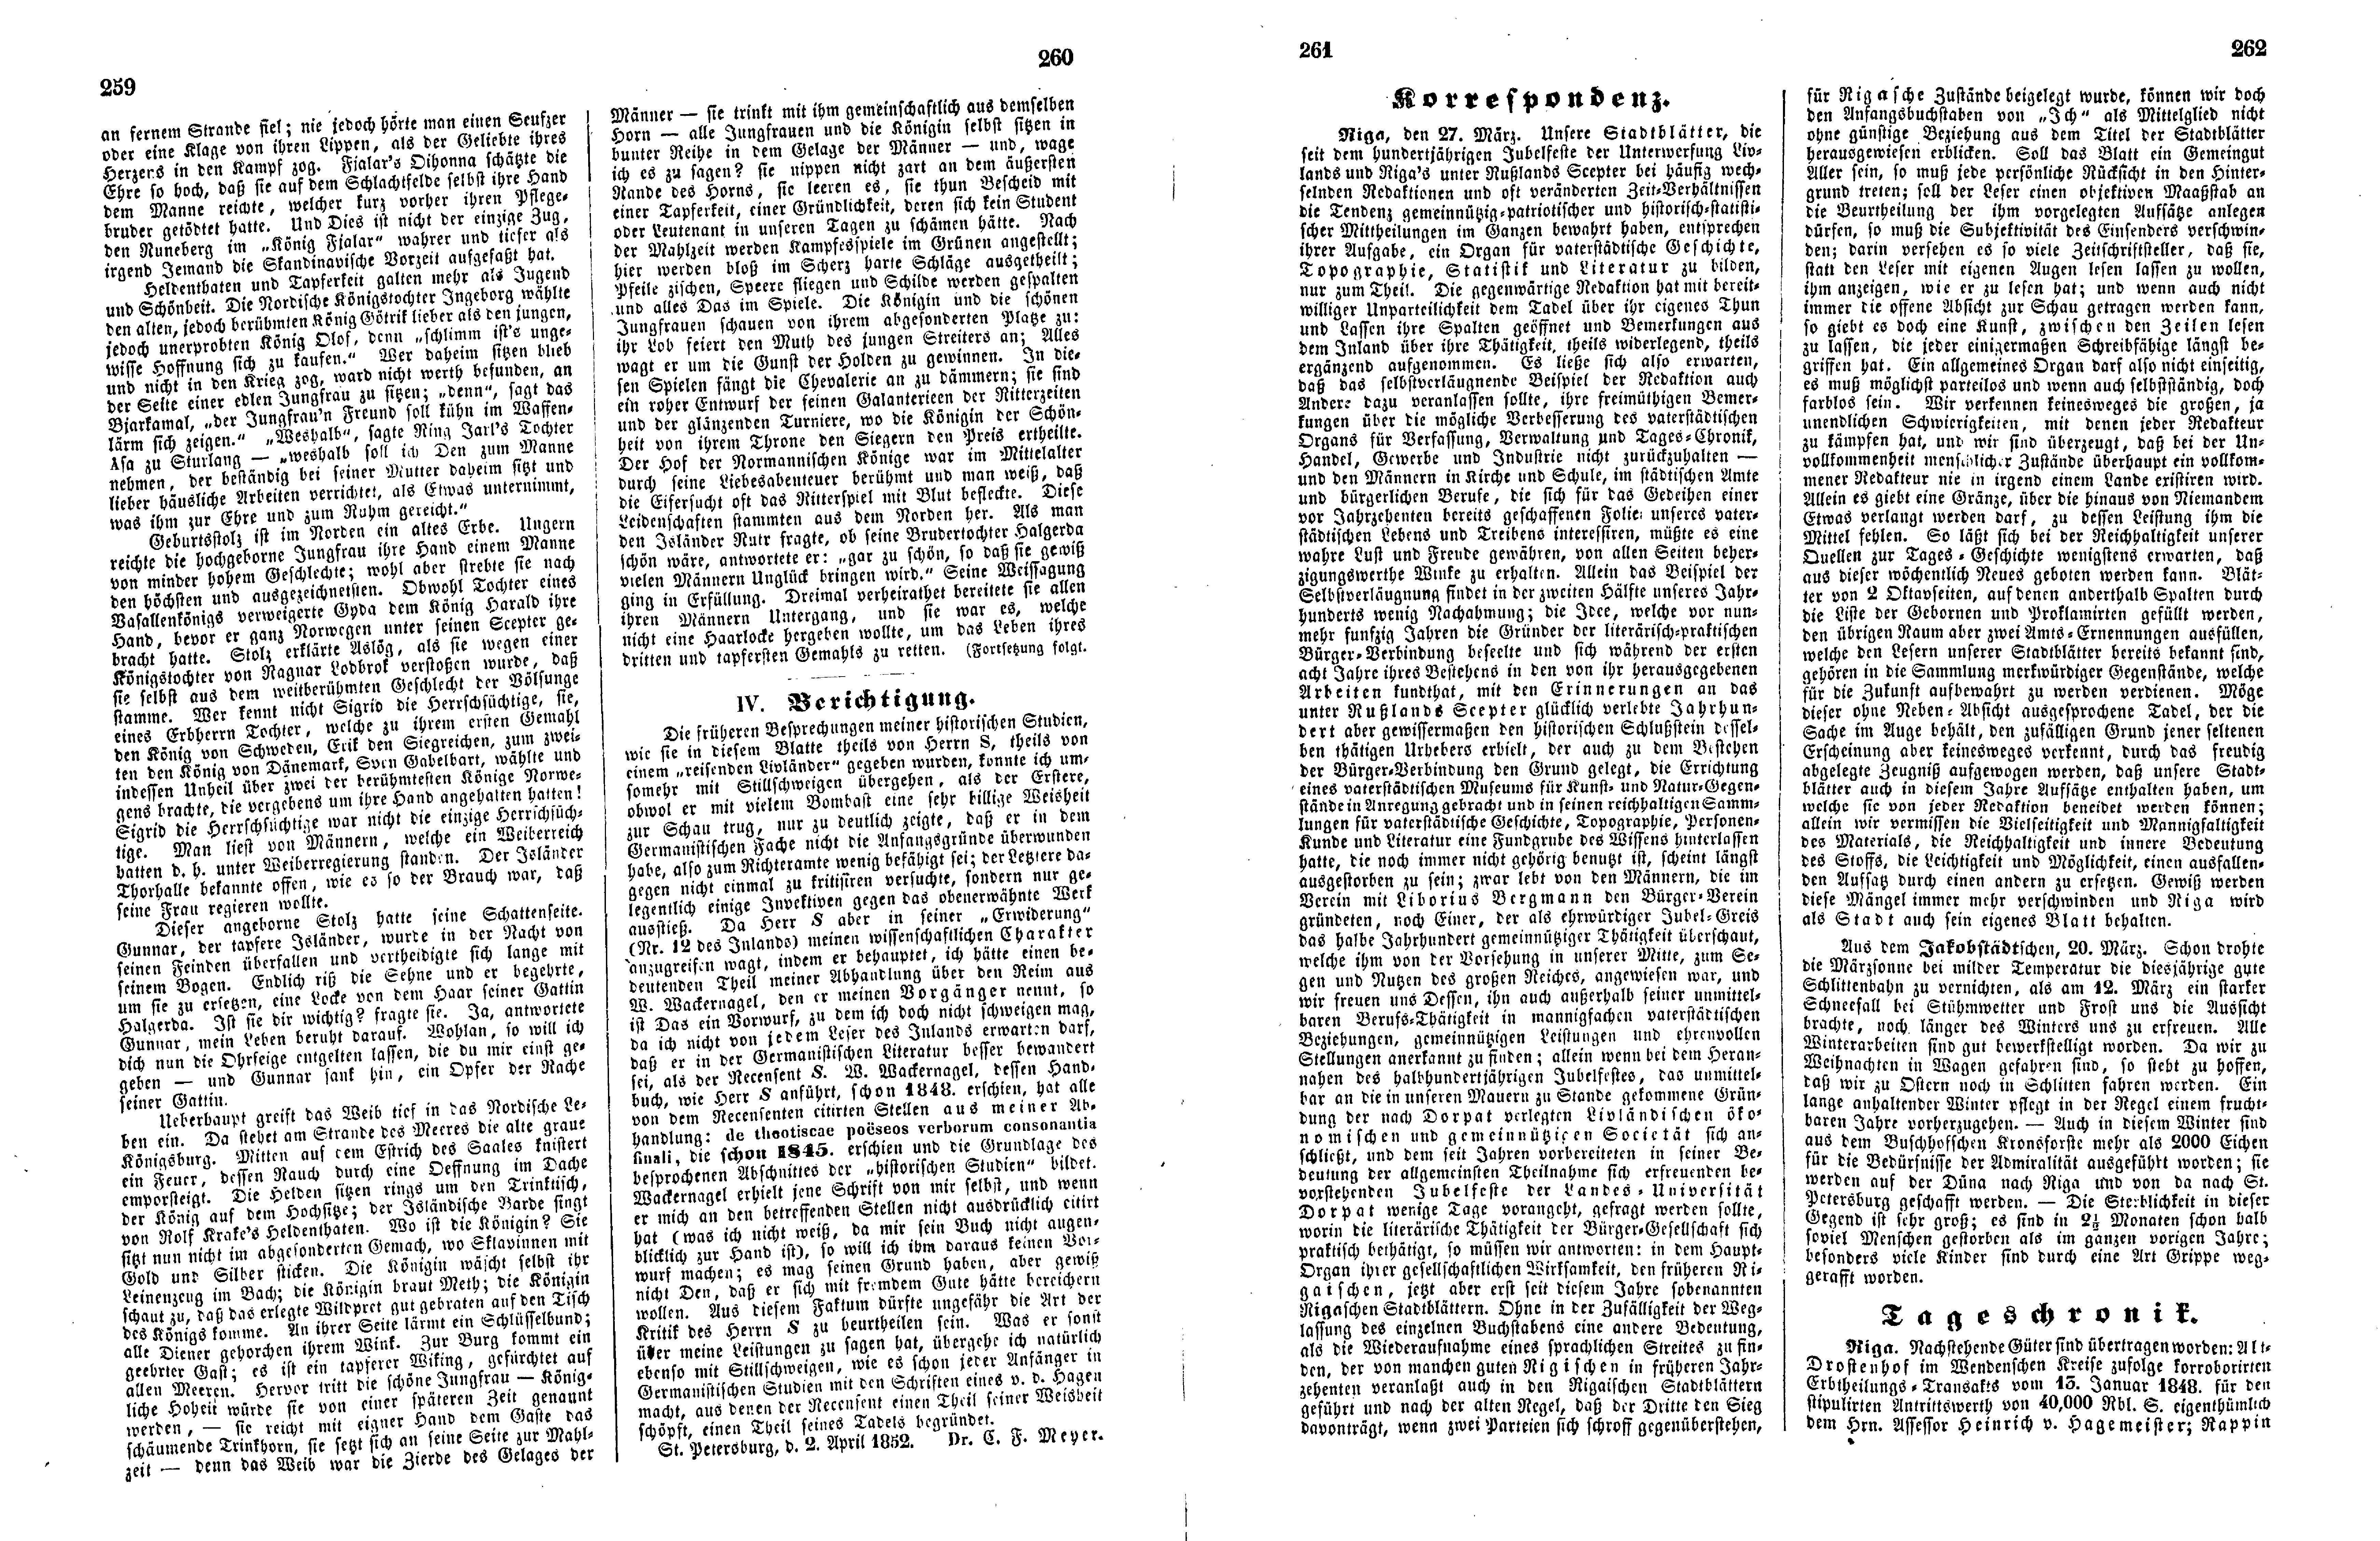 Das Inland [17] (1852) | 69. (259-262) Main body of text